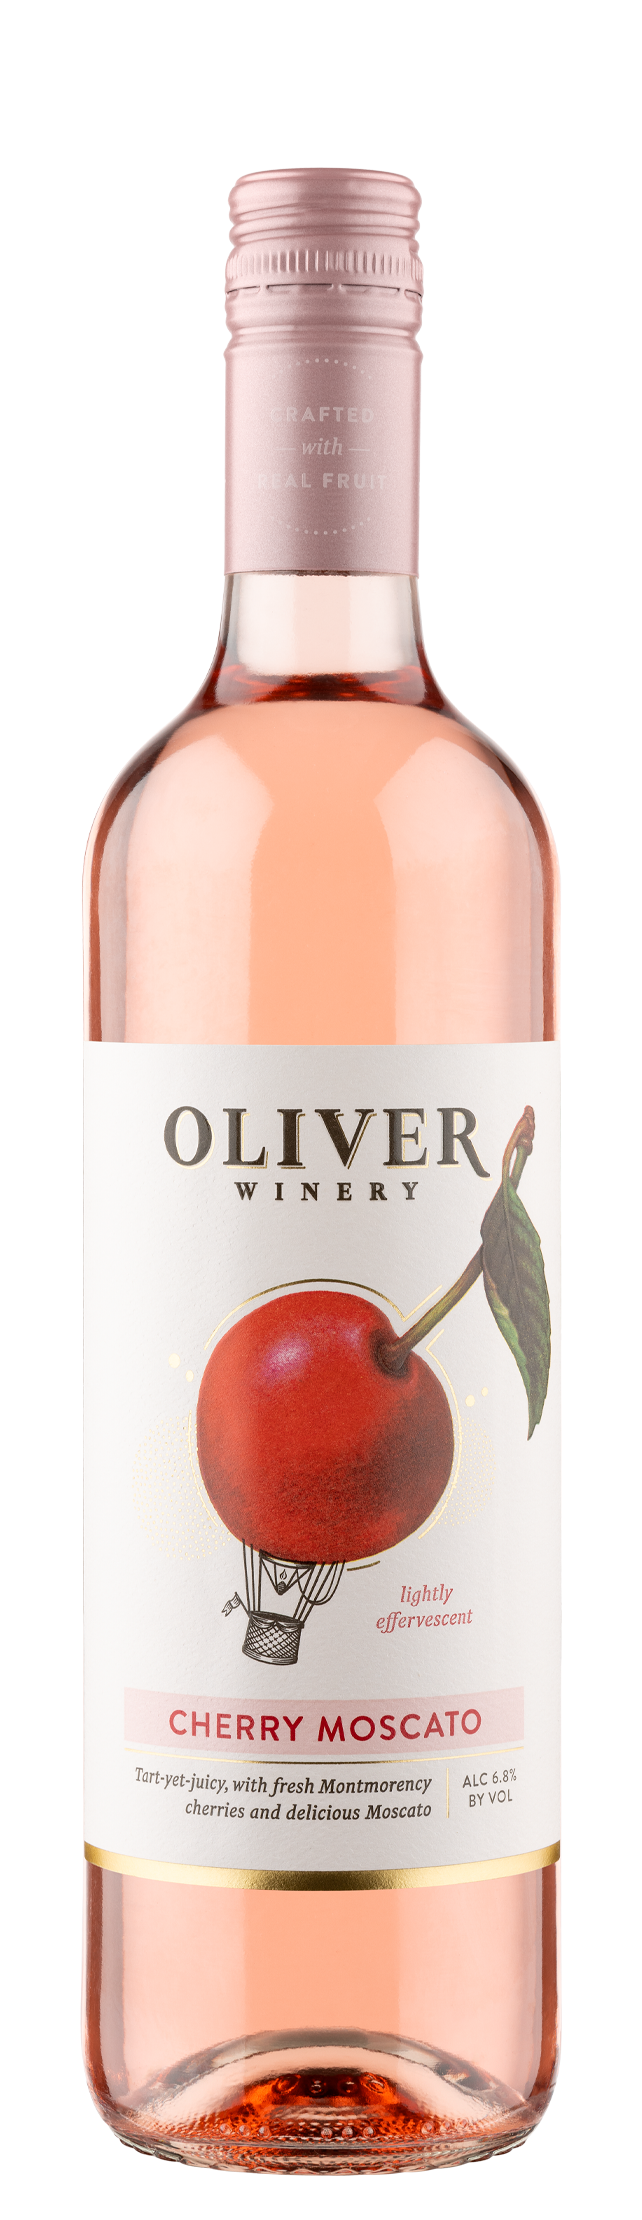 Oliver Winery Vine Series Cherry Moscato Wine